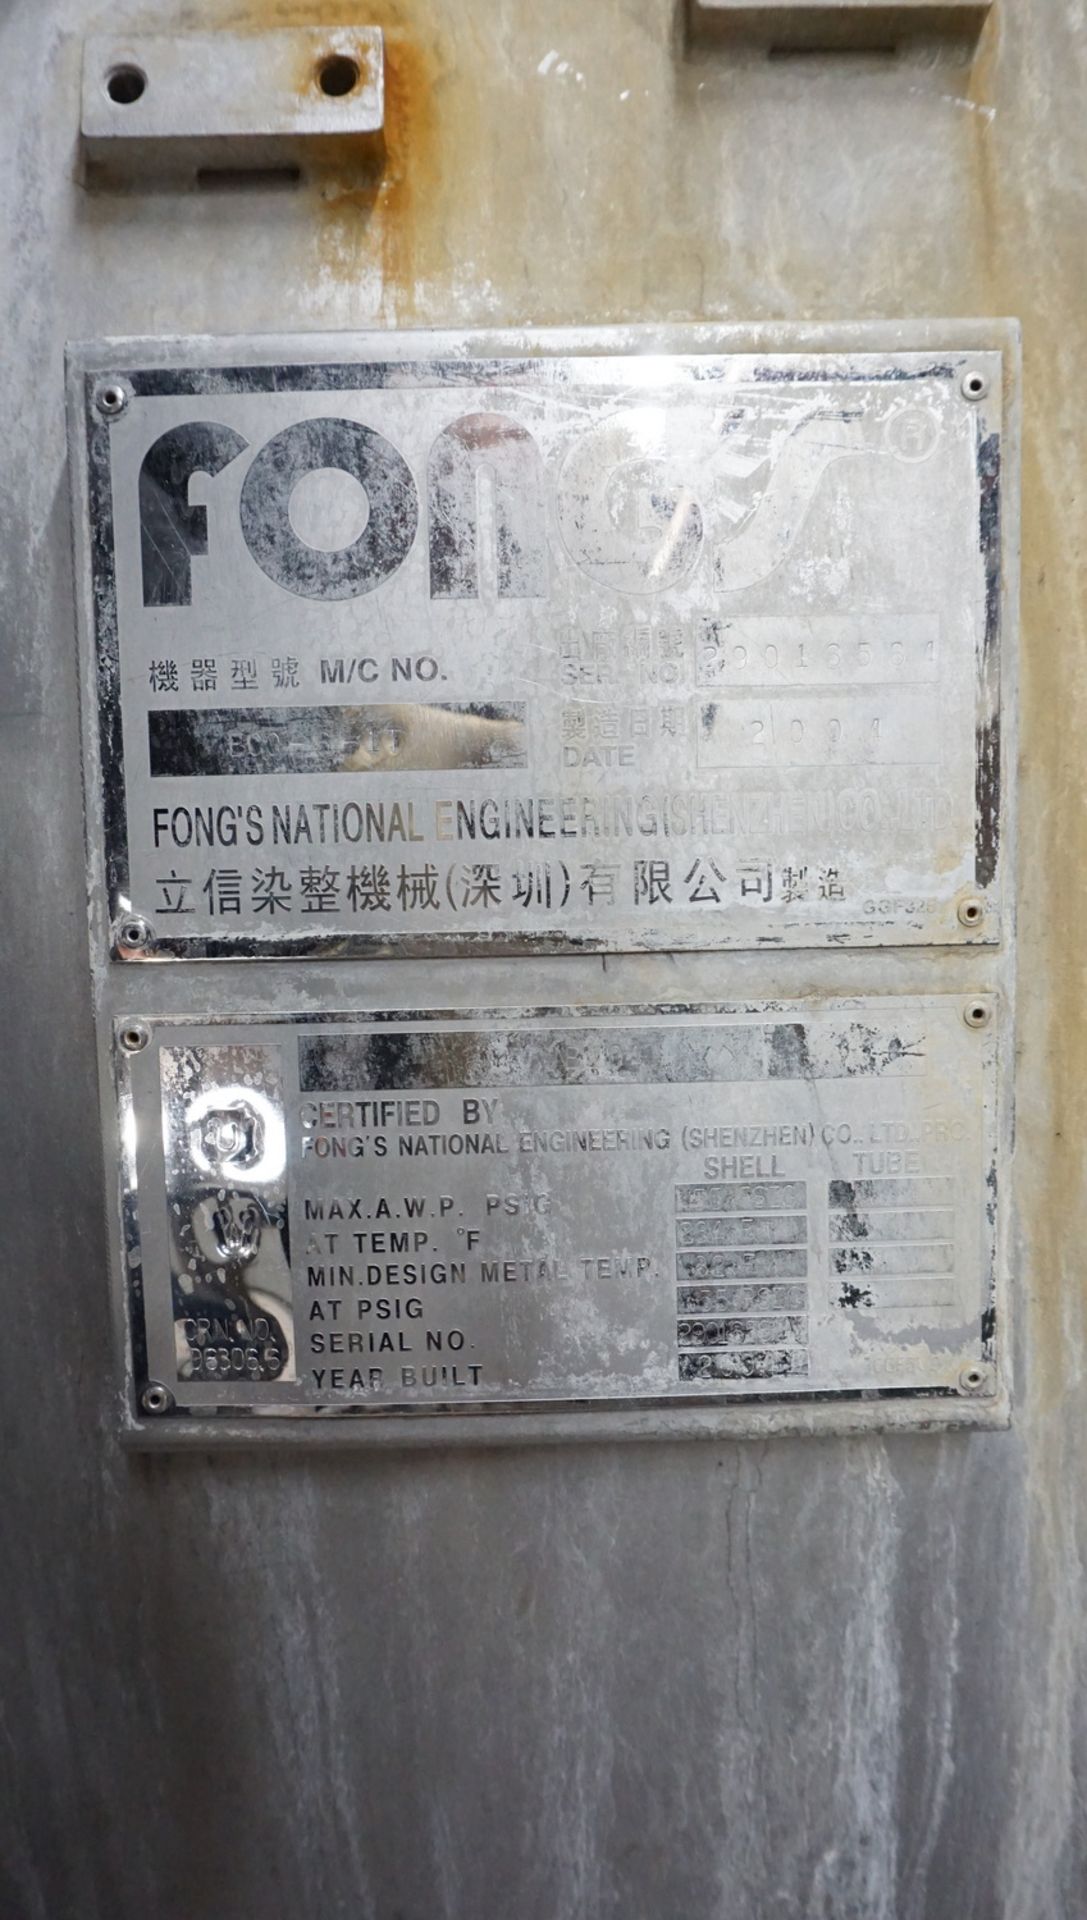 2004 FONGS JET DYE MACHINE MODEL SOFT FLOW W/ 1-DYE BATH, 200KGS CAP, S/N 29016561 (575V/60HZ/ - Image 4 of 4